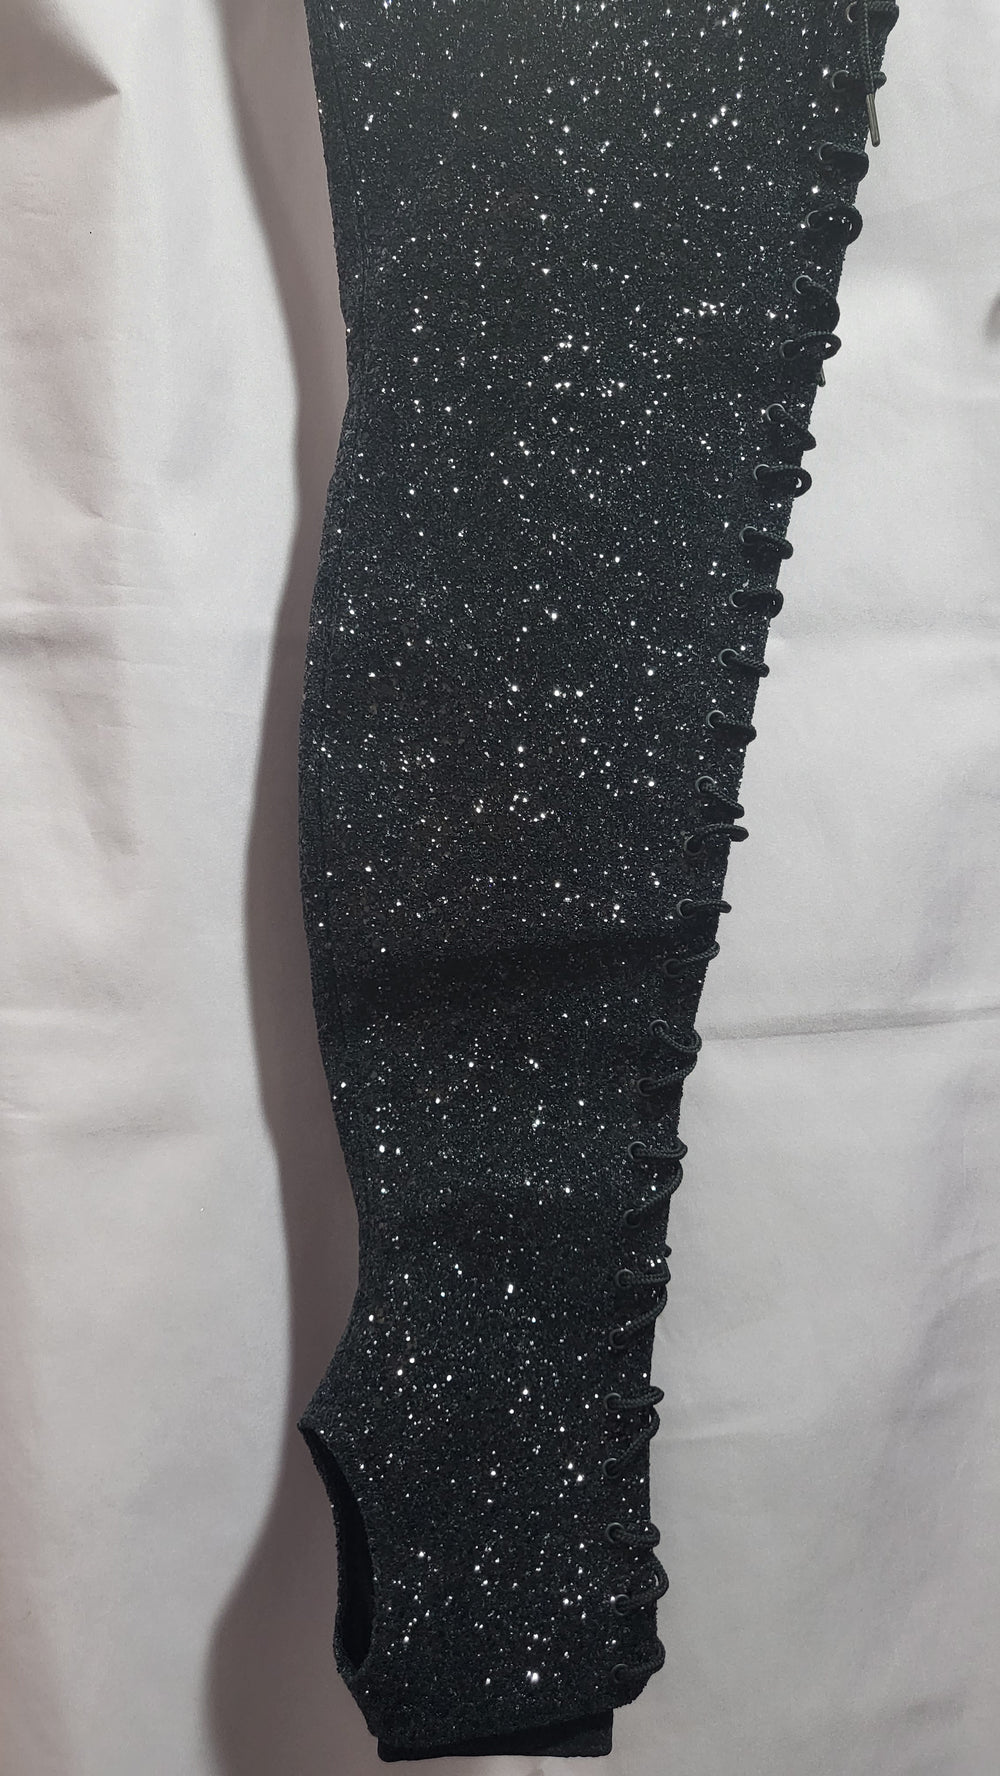 Z PLANET Thigh High Bootsleeves - Black Glitter